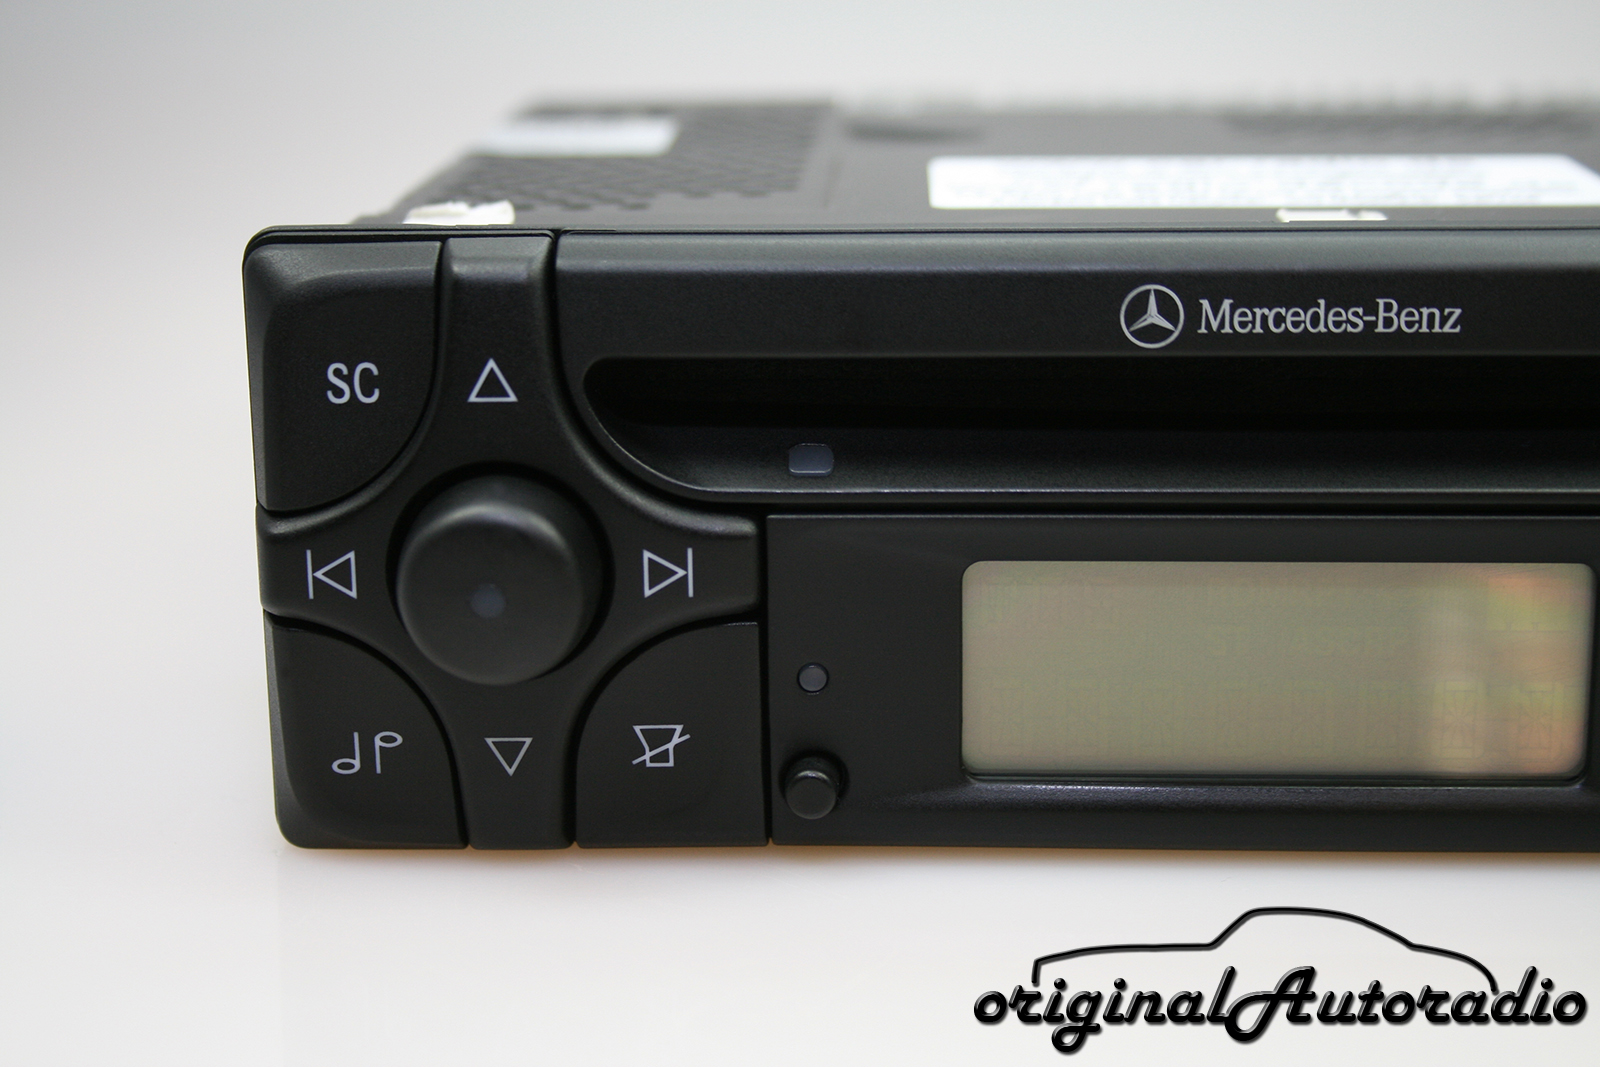 Genuine Mercedes W163 Radio Audio 10 CD MF2199 CD-R Car Stereo ML Class RDS D2B 